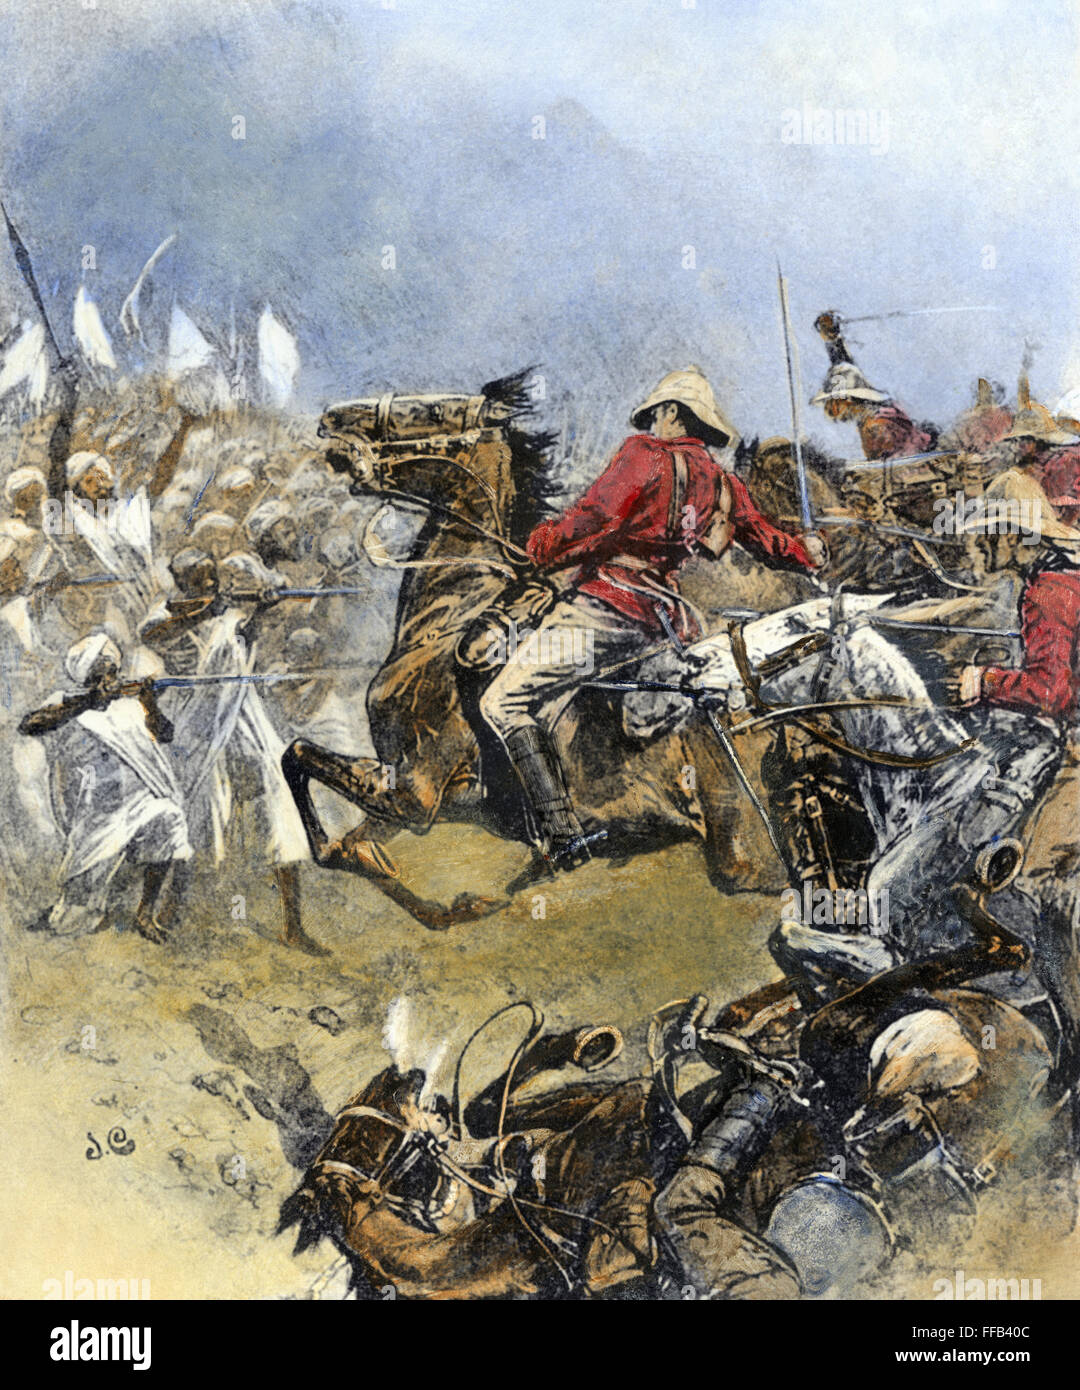 La bataille d'Omdurman, 1898. /NCharge du 21st Lancers à la bataille d'Omdurman, 2 septembre 1898. Contemporain couleur illustration de journal. Banque D'Images